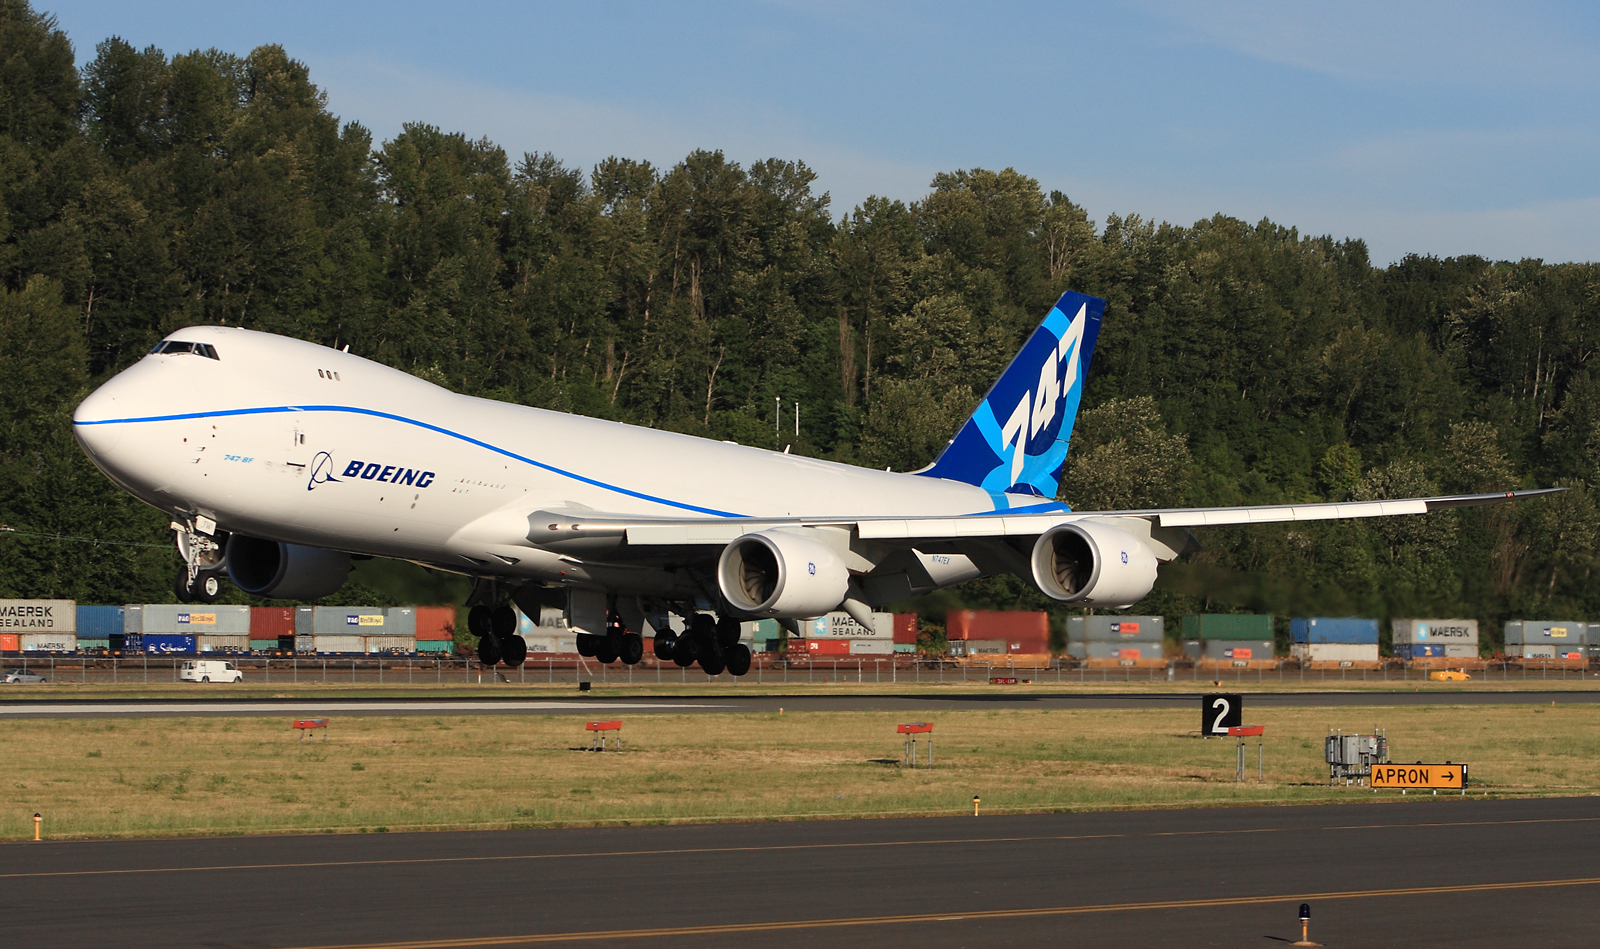 747-8F flight testing